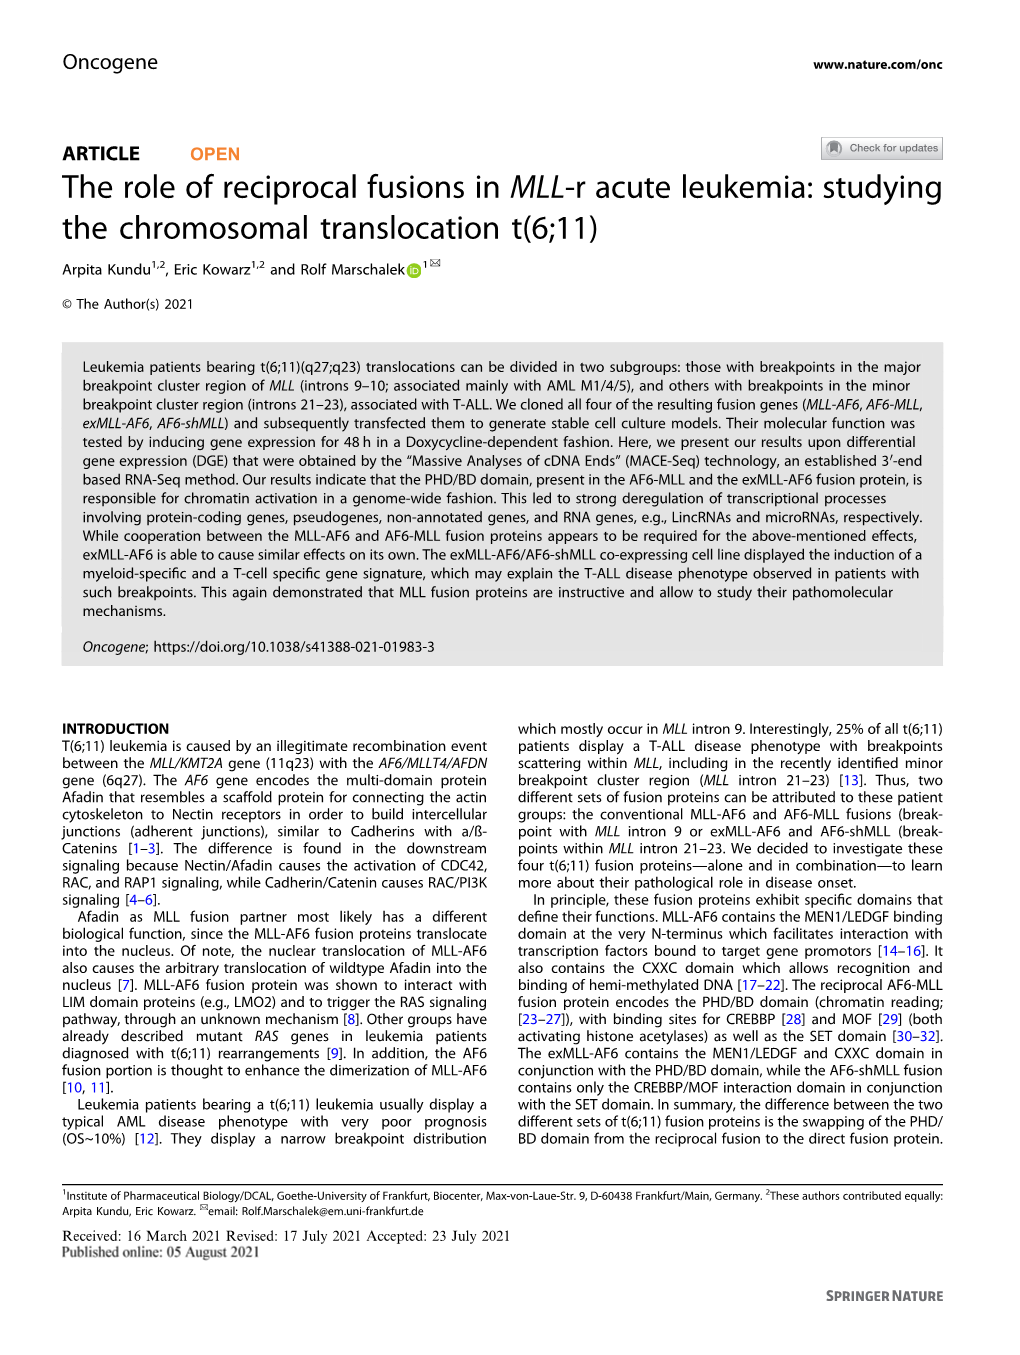 The Role of Reciprocal Fusions in MLL-R Acute Leukemia: Studying the Chromosomal Translocation T(6;11) ✉ Arpita Kundu1,2, Eric Kowarz1,2 and Rolf Marschalek 1